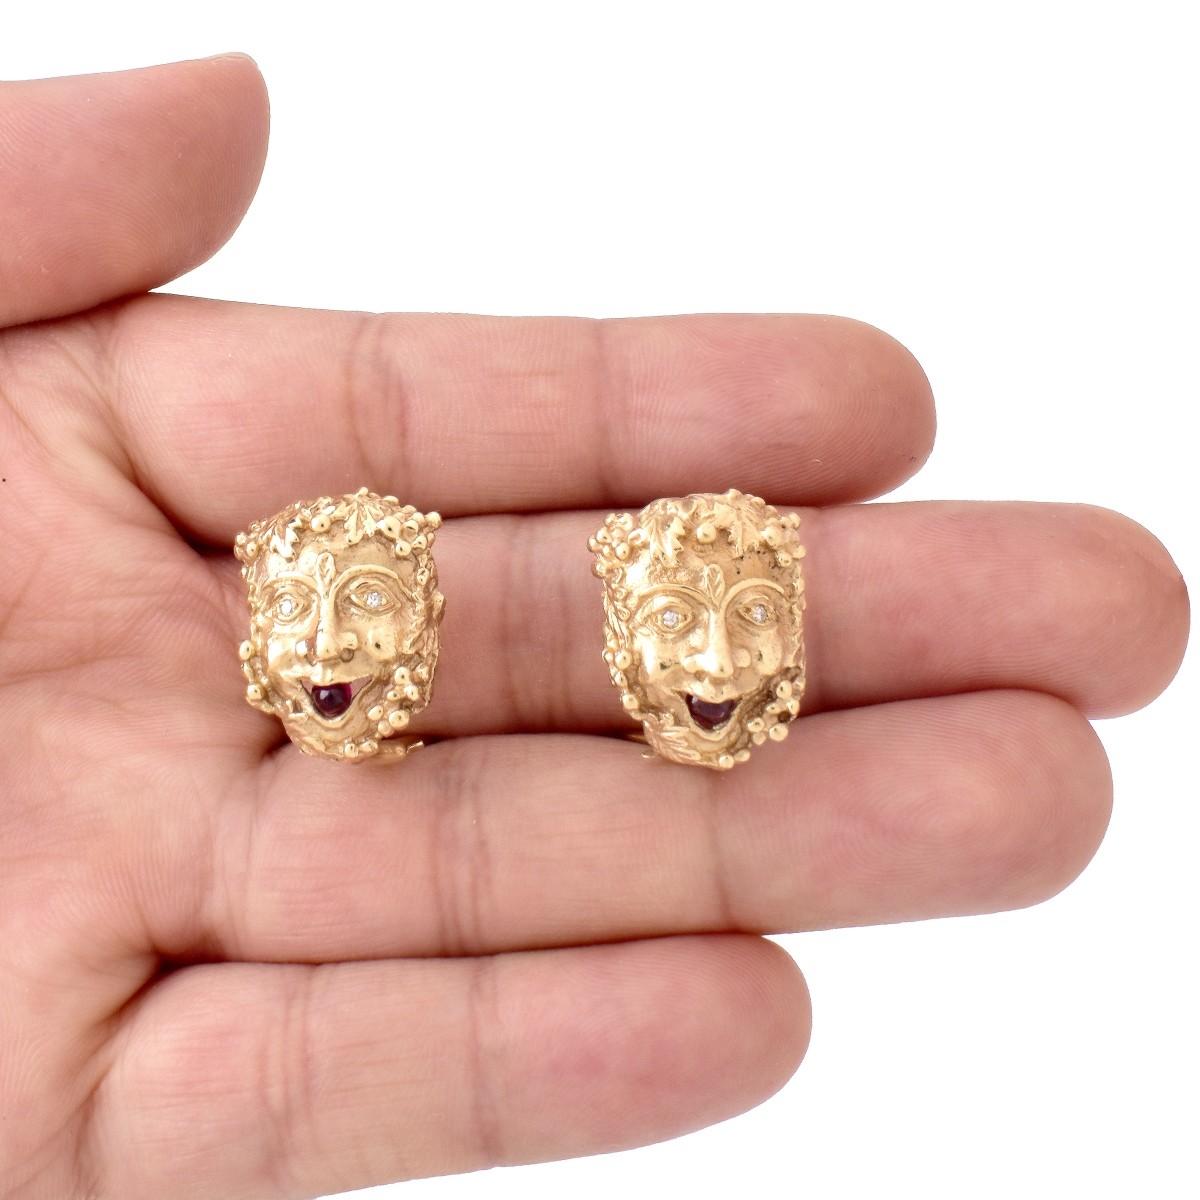 14K Gold Satyr Earrings